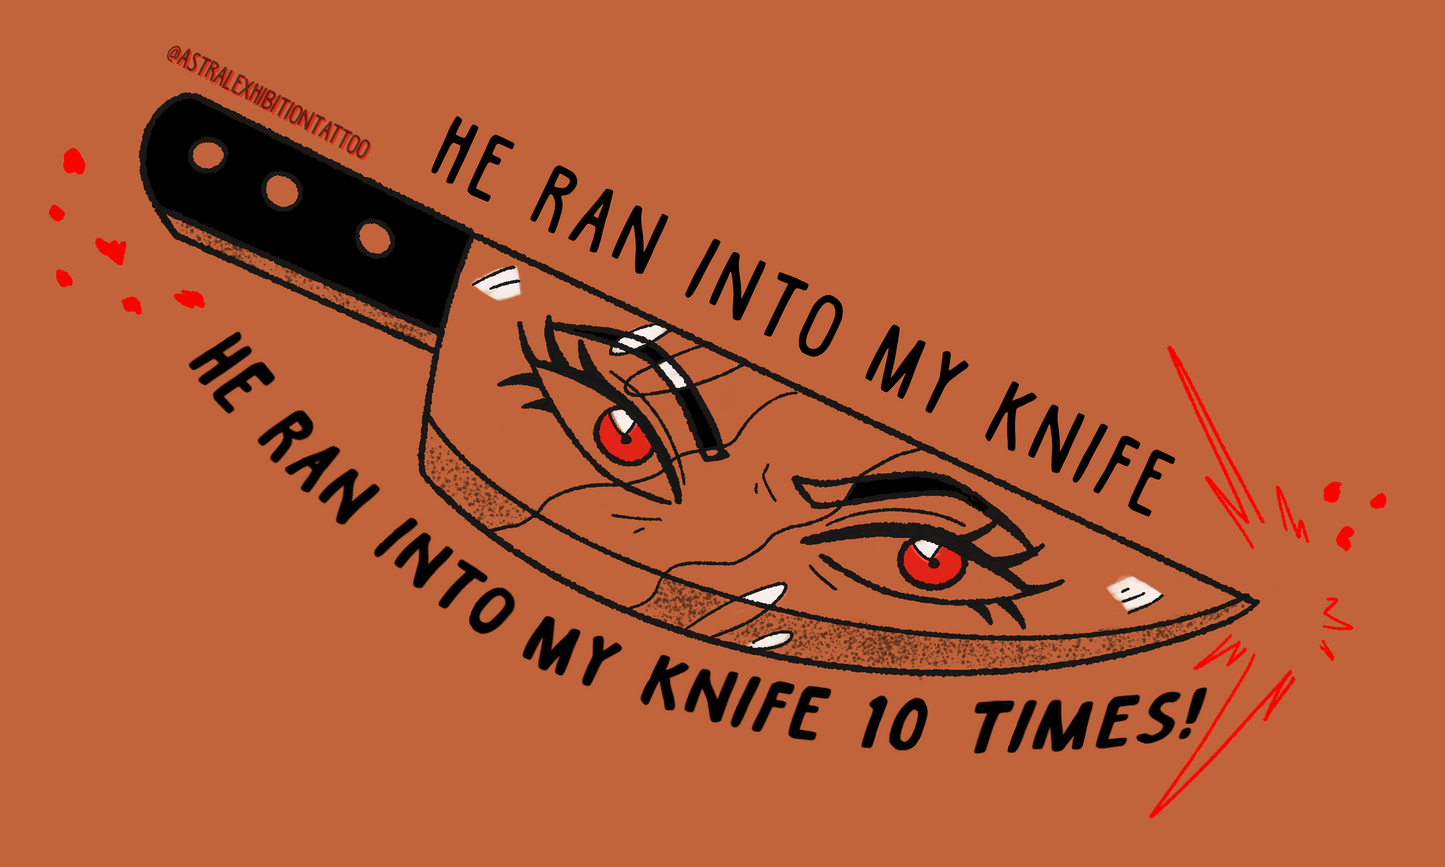 He Ran Into My Knife